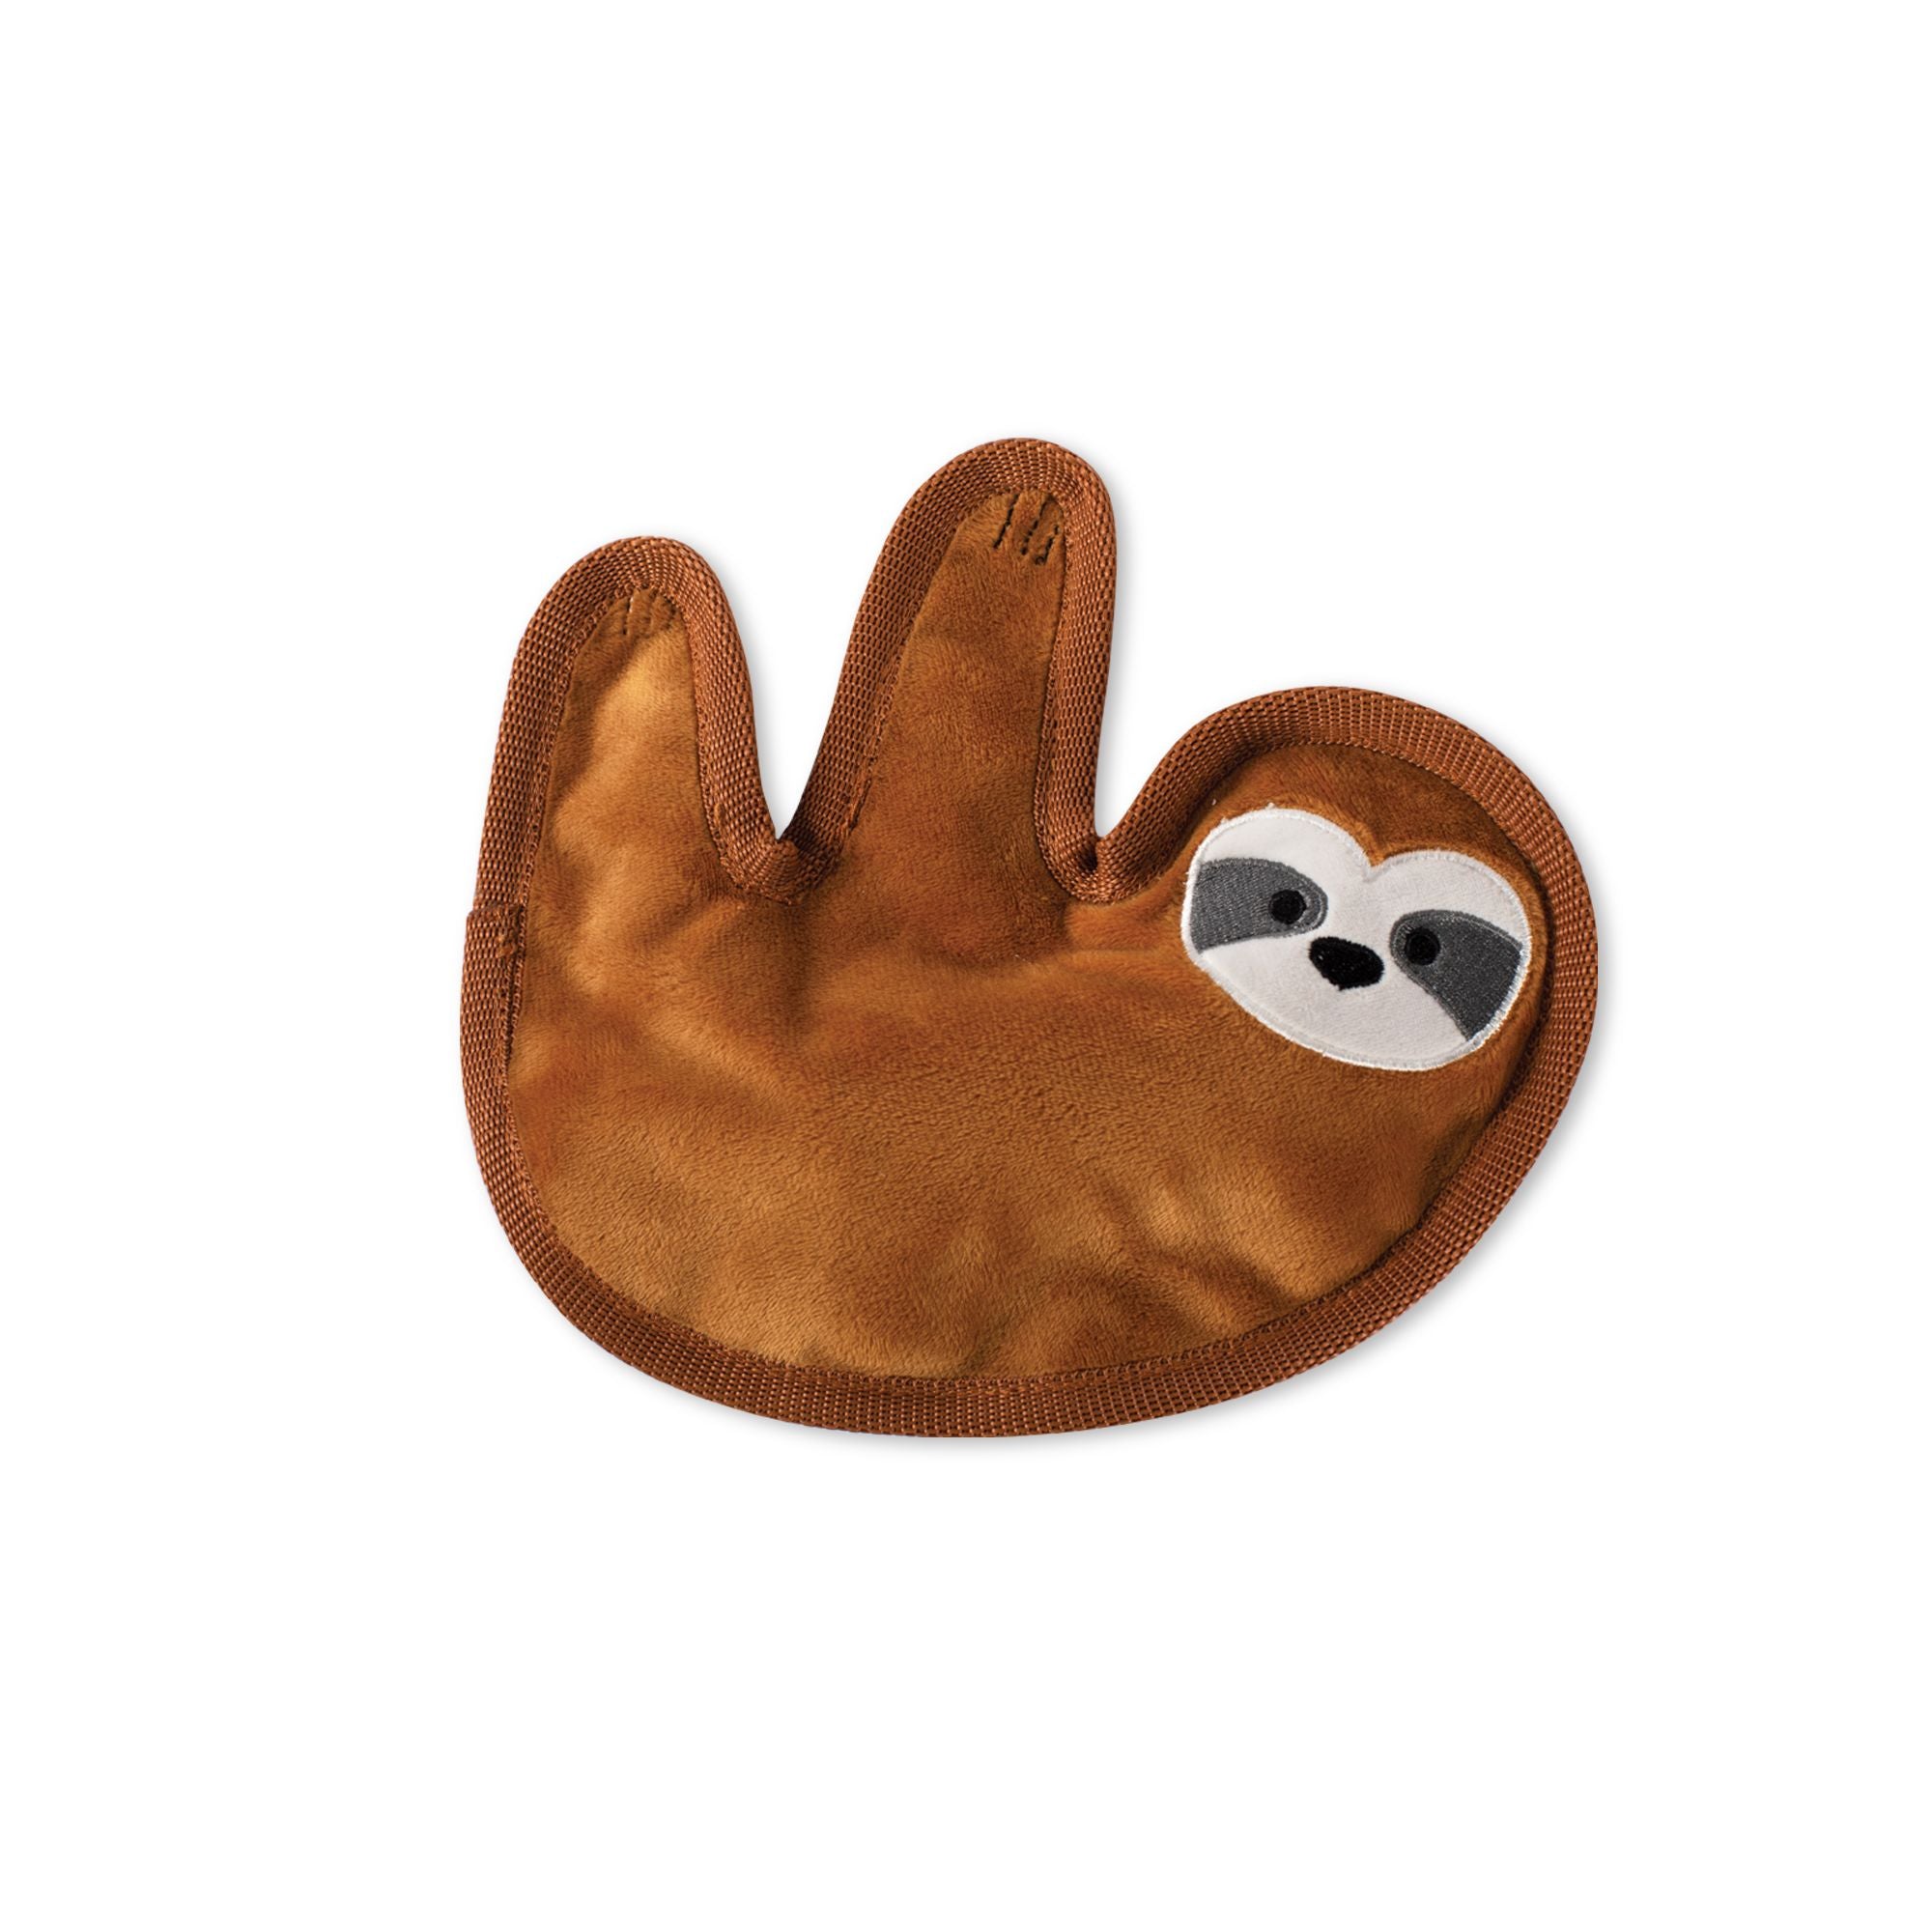 Fringe Studio PetShop Sloth  |  No-Stuffing Durable Squeaky Plush Toy